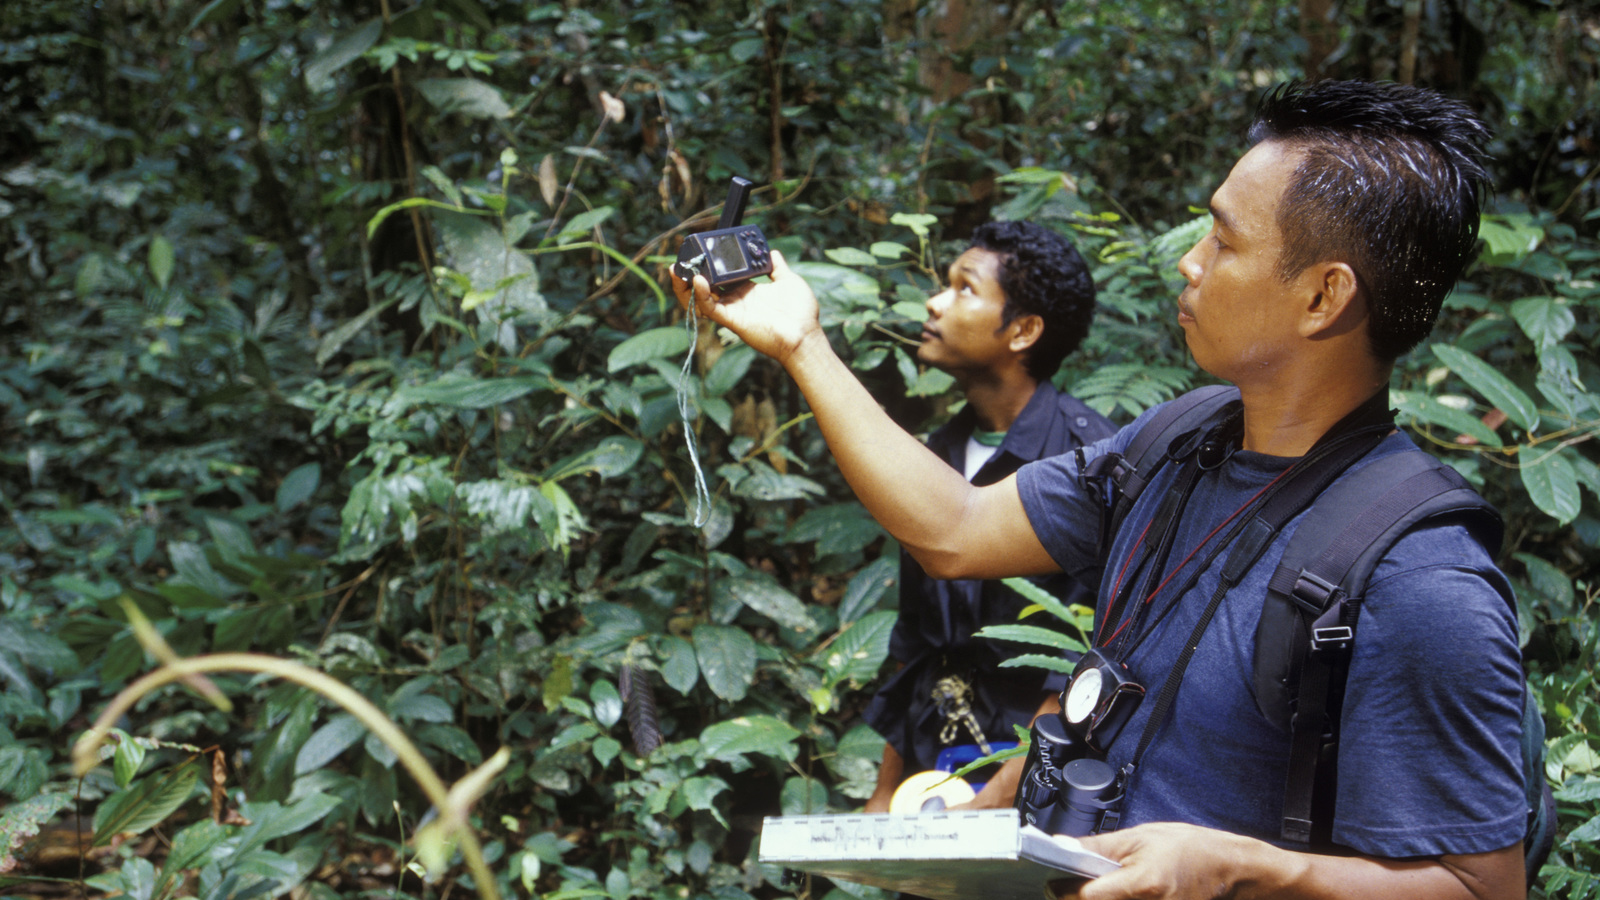 TNC's Nardiyono, Team Leader of the Orangutan Nest Survey, uses a GPS to plot location during survey work in the Lesan River Orangutan Survey site. Photo © The Nature Conservancy (Mark Godfrey)